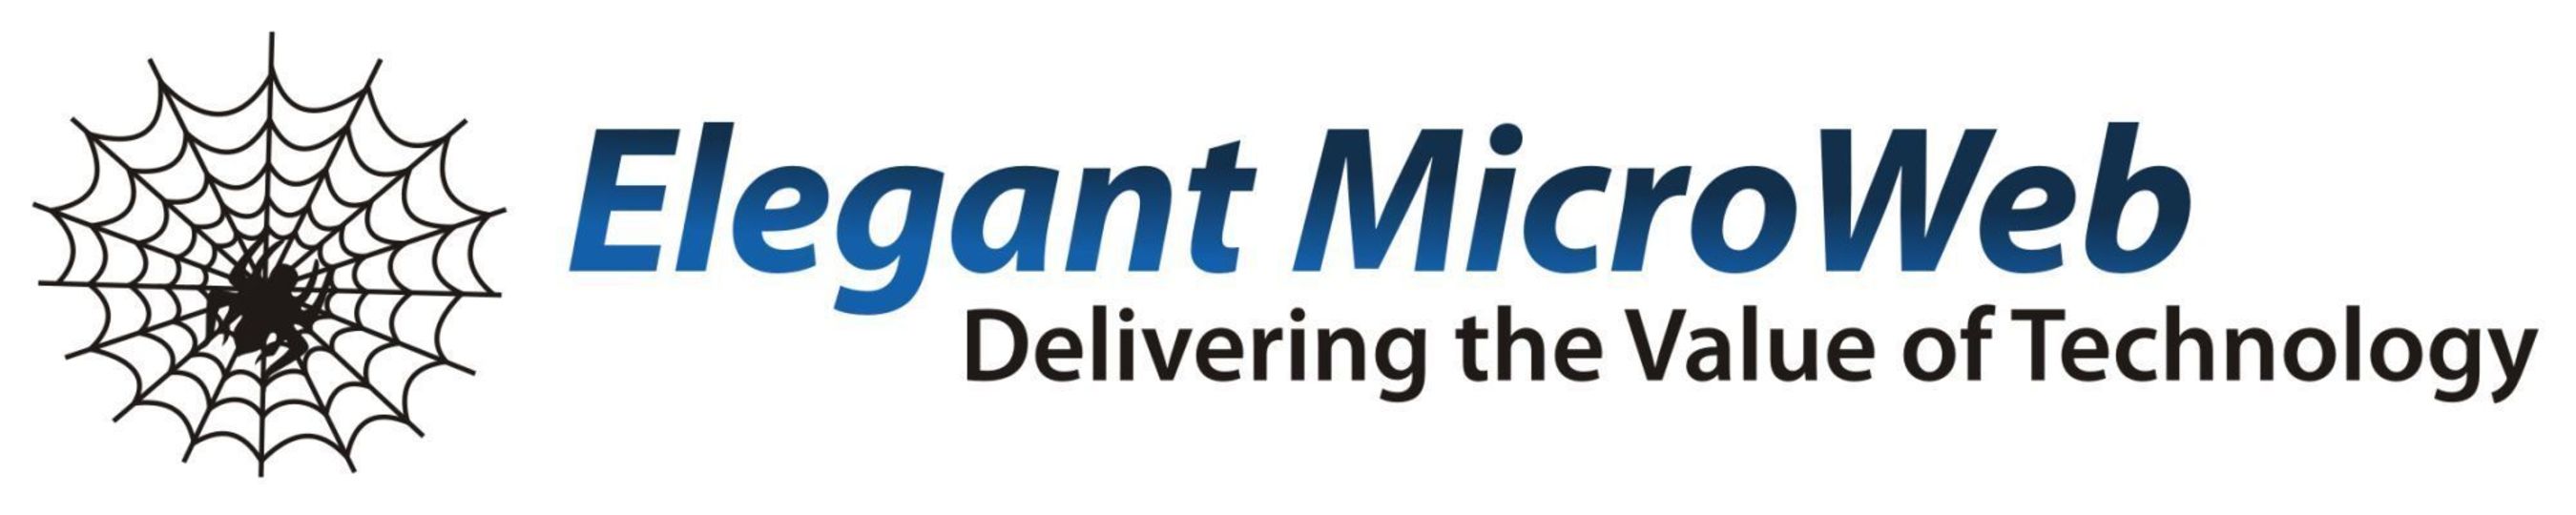 Elegant MicroWeb Logo (PRNewsFoto/Elegant MicroWeb)